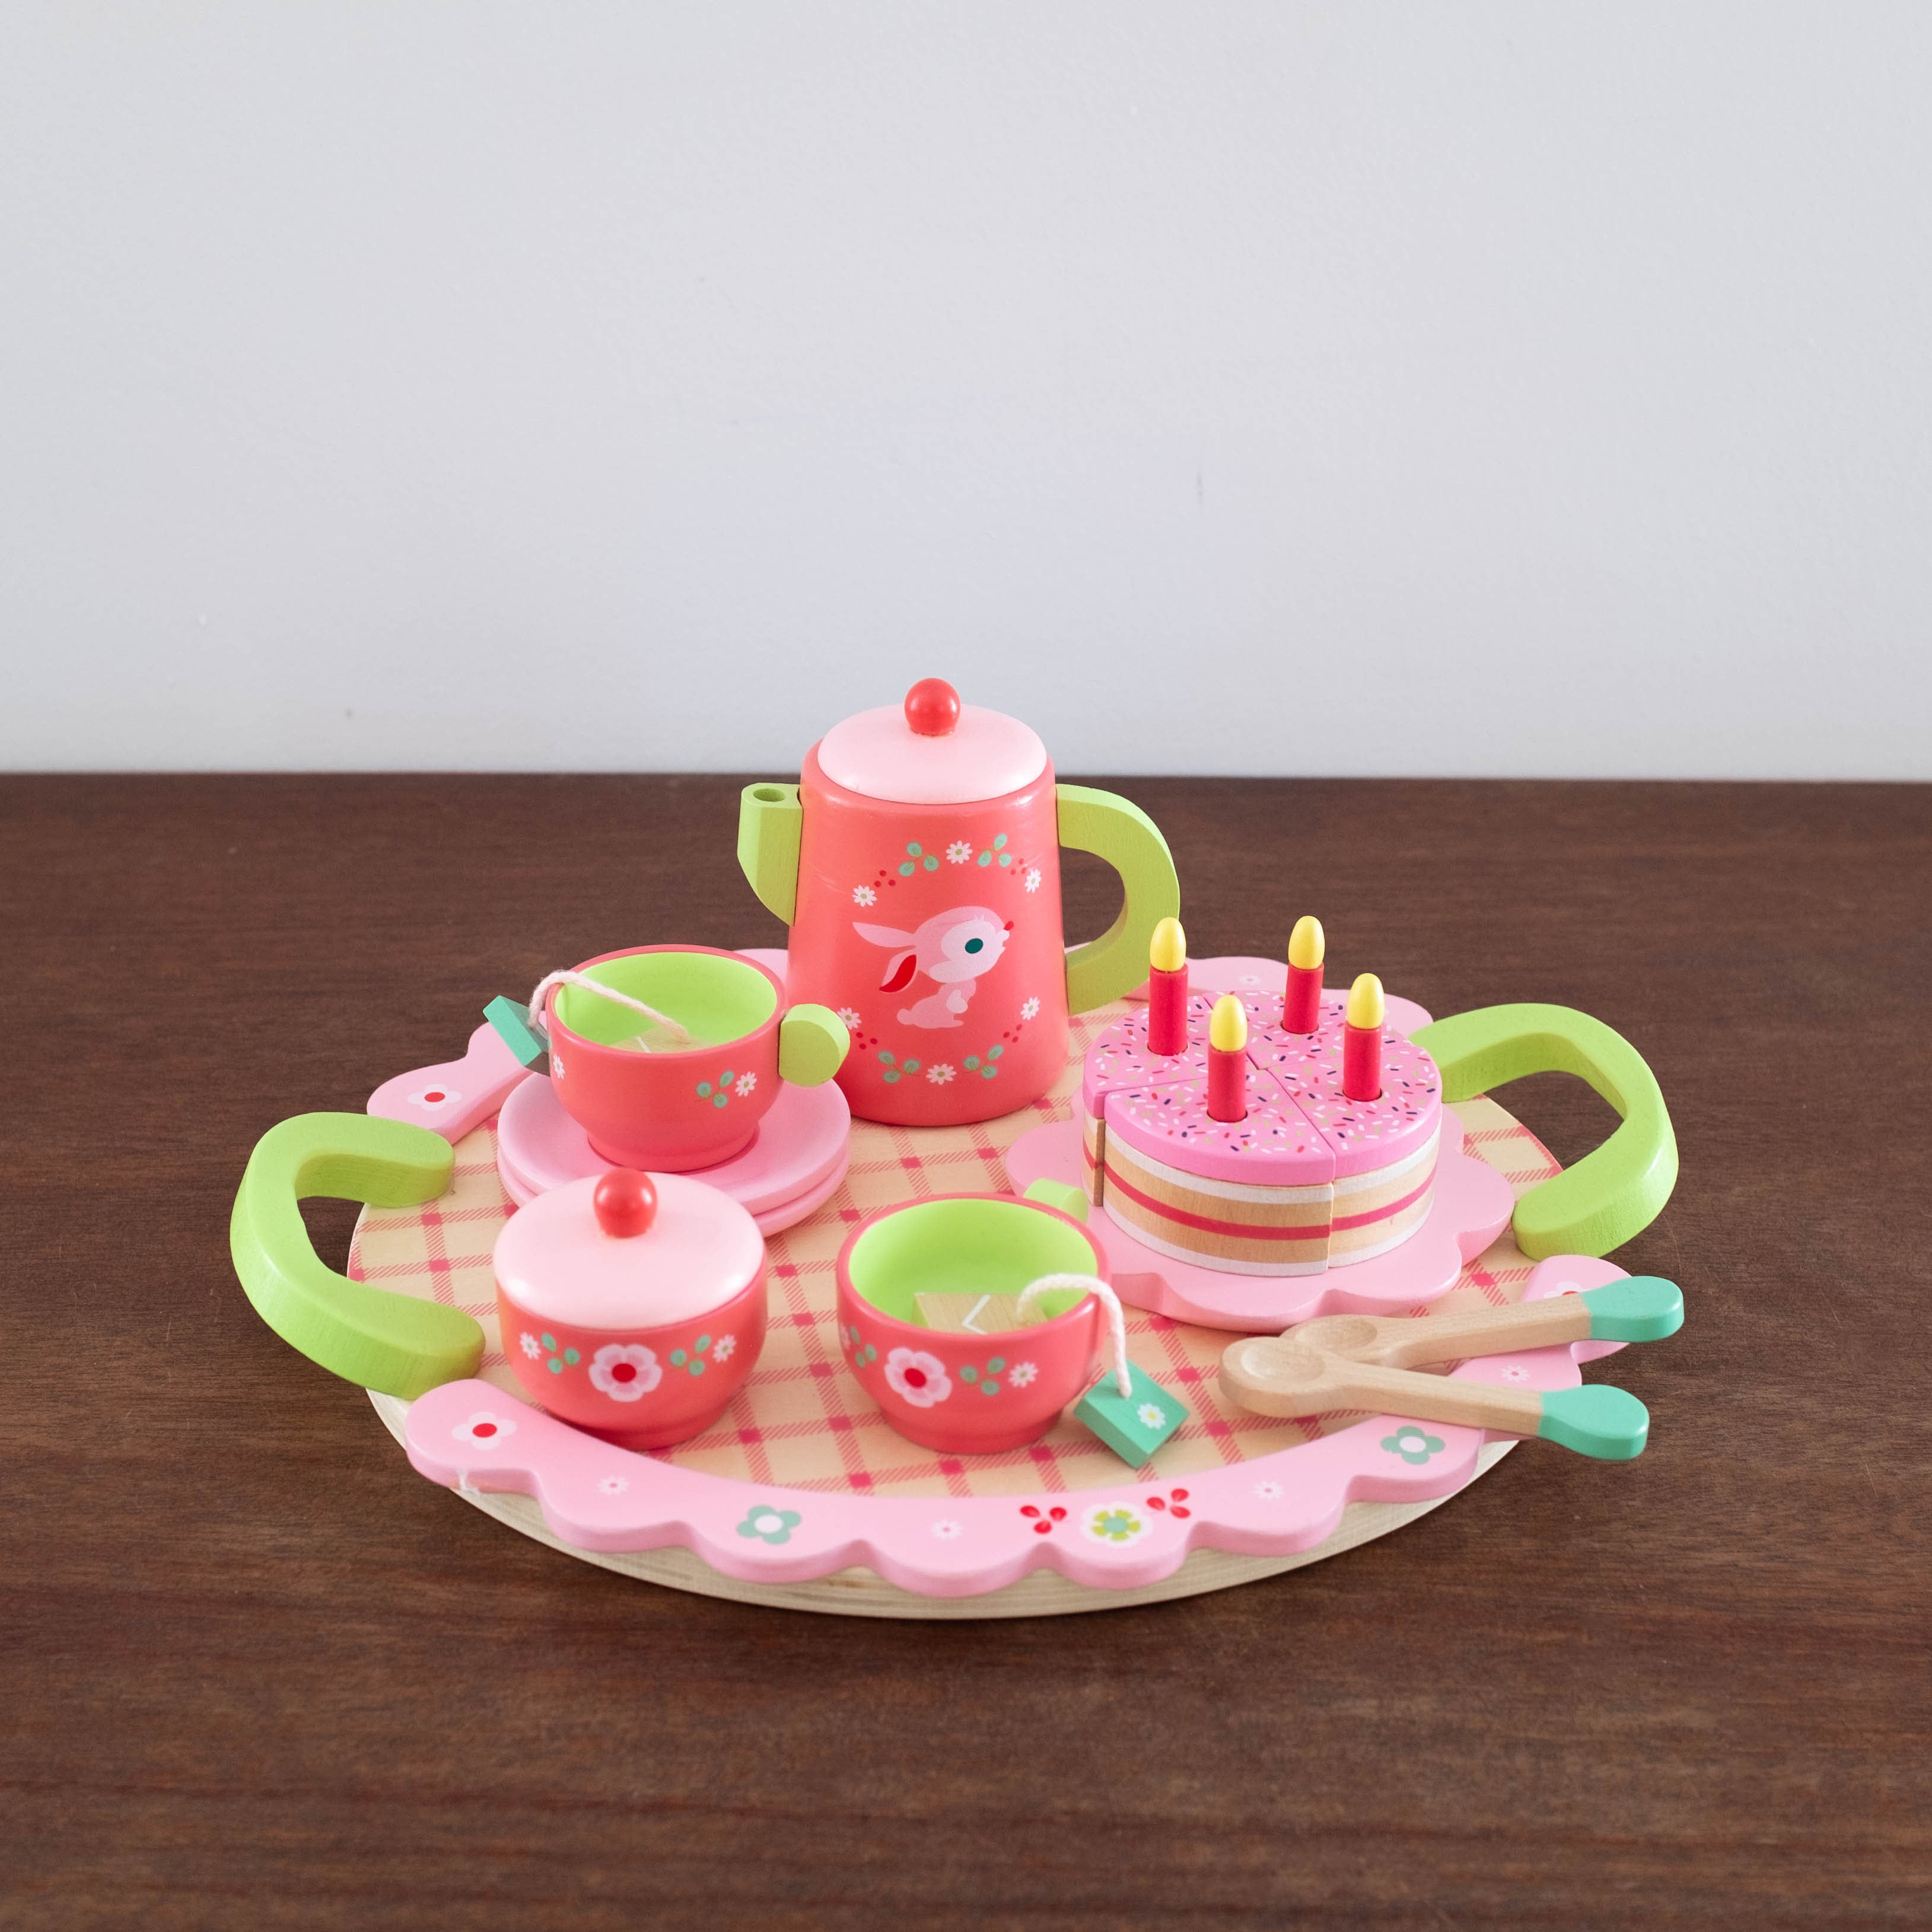 Tea Party Wooden Toy Set - Pink